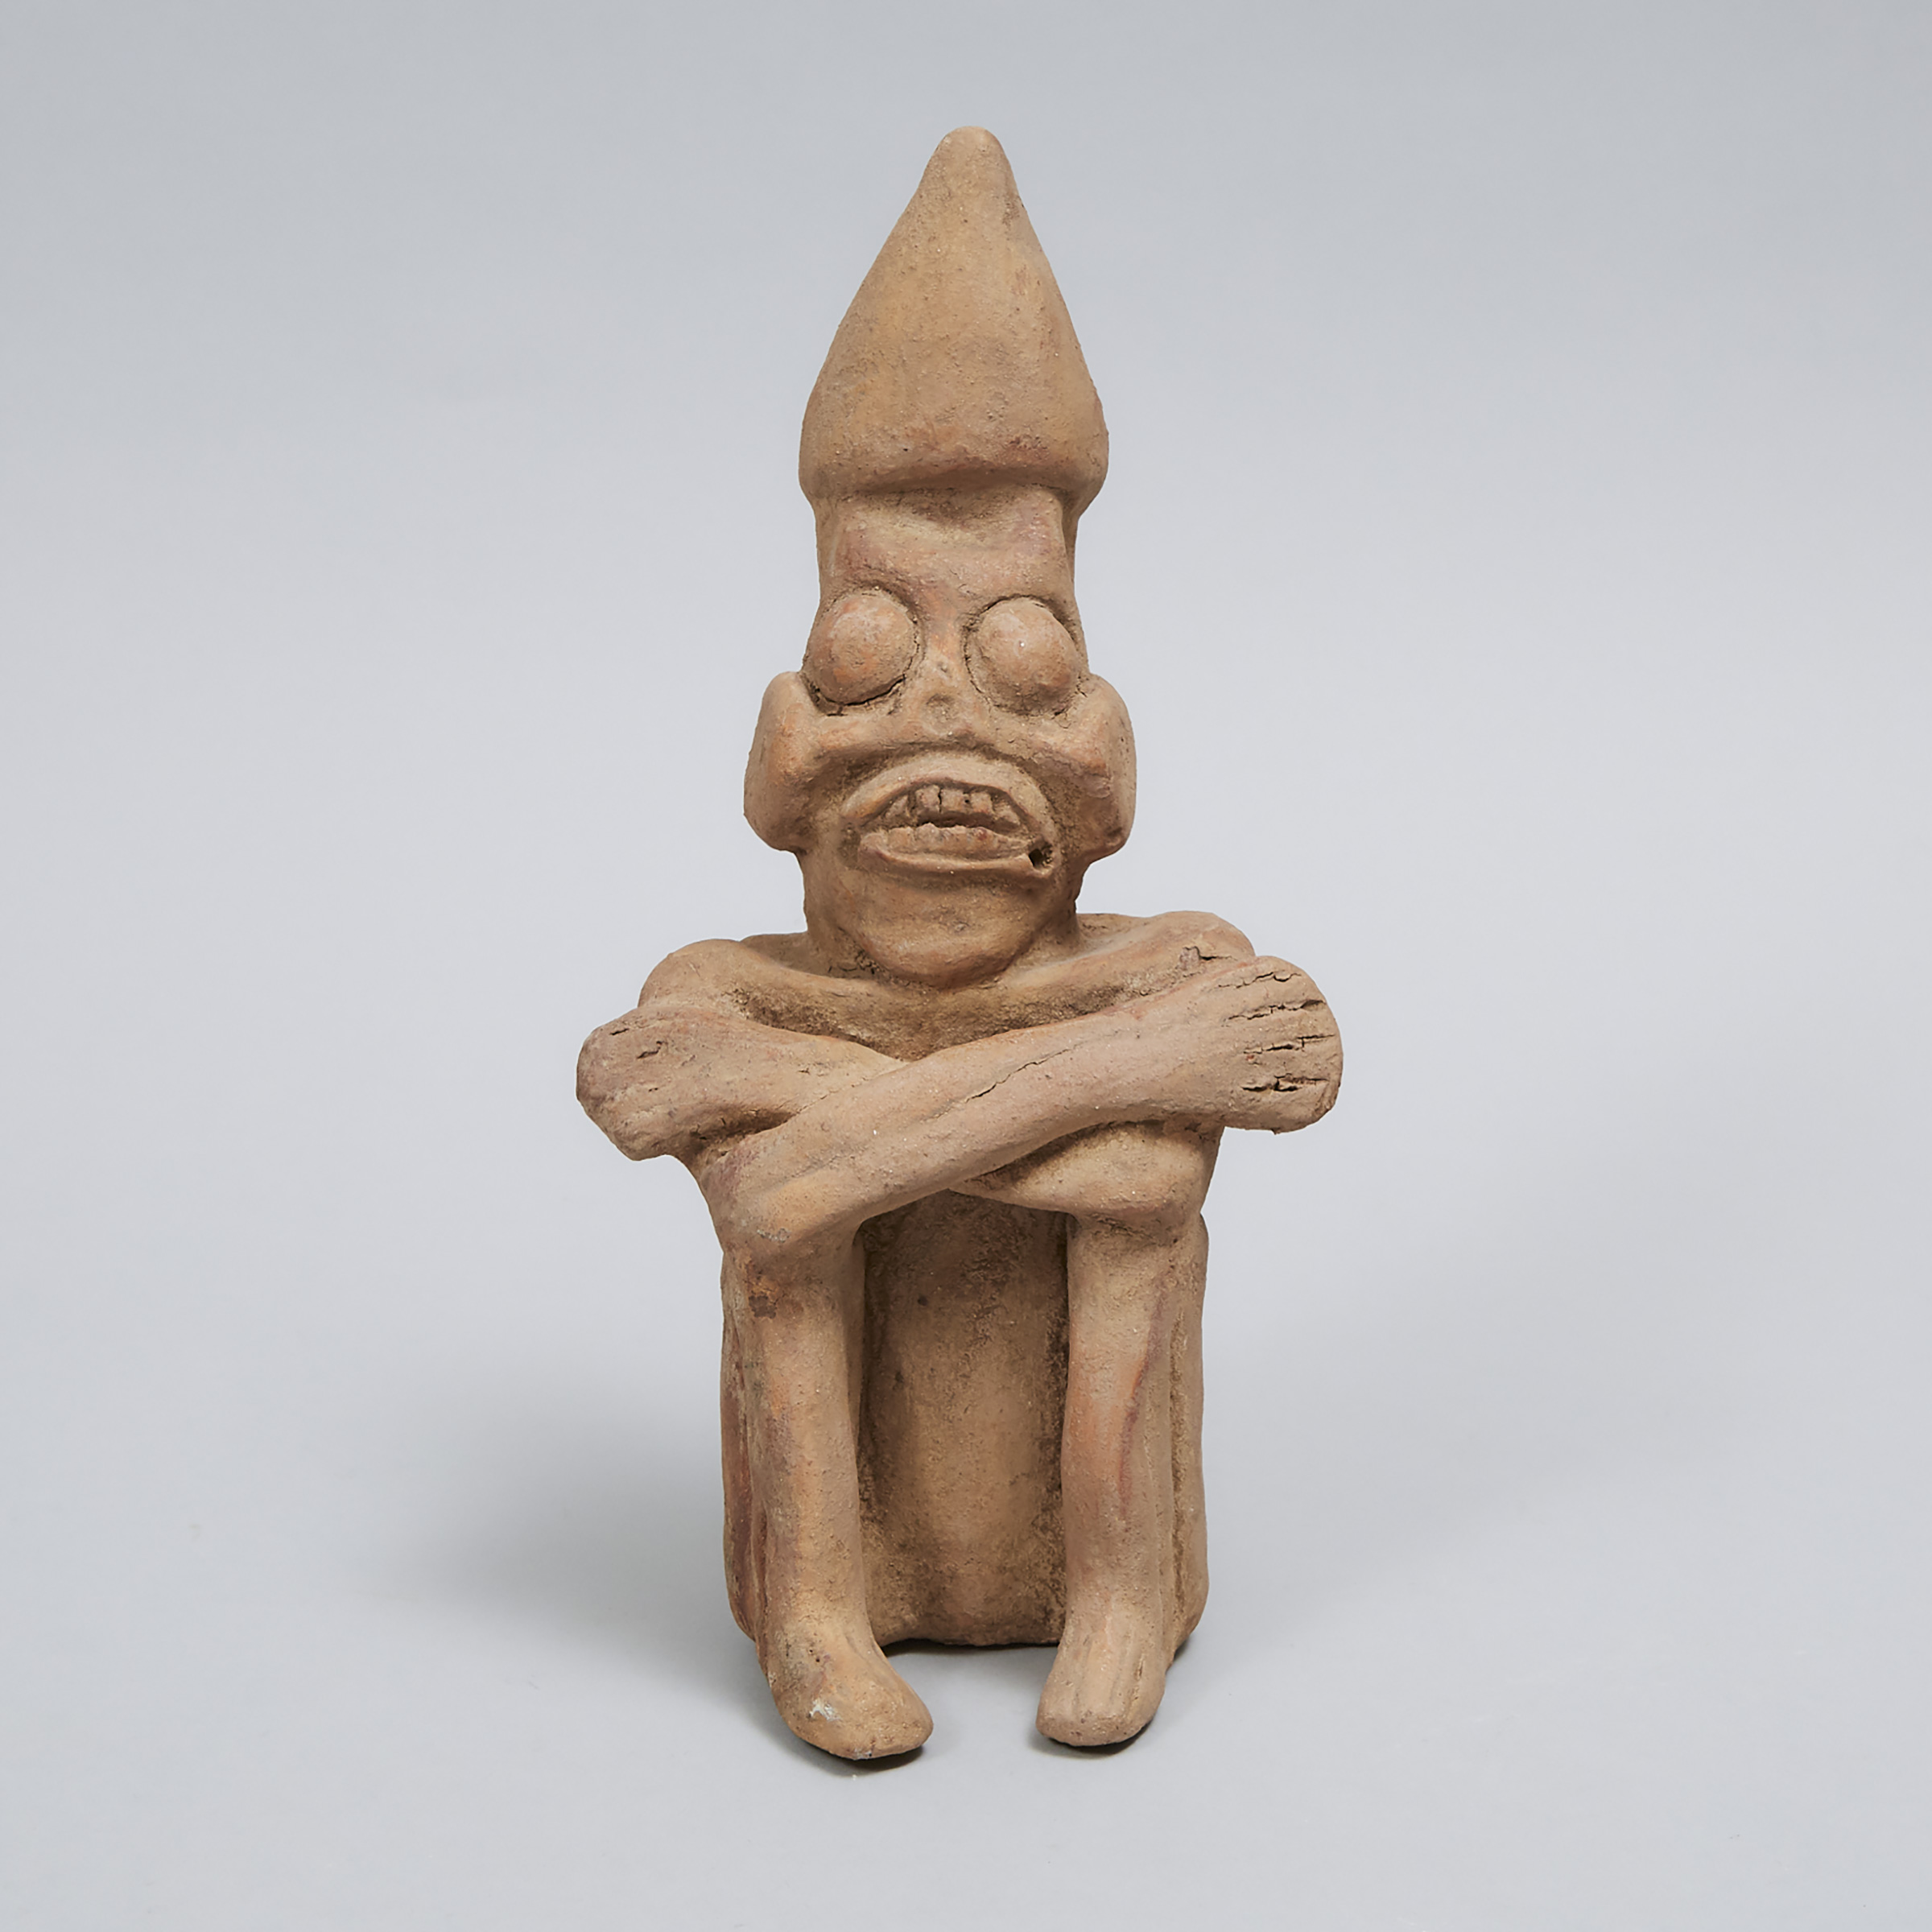 Totonac (Veracruz) Pottery Figure of Mictlāntēcutli, South East Mexico, 600 - 900 A.D.